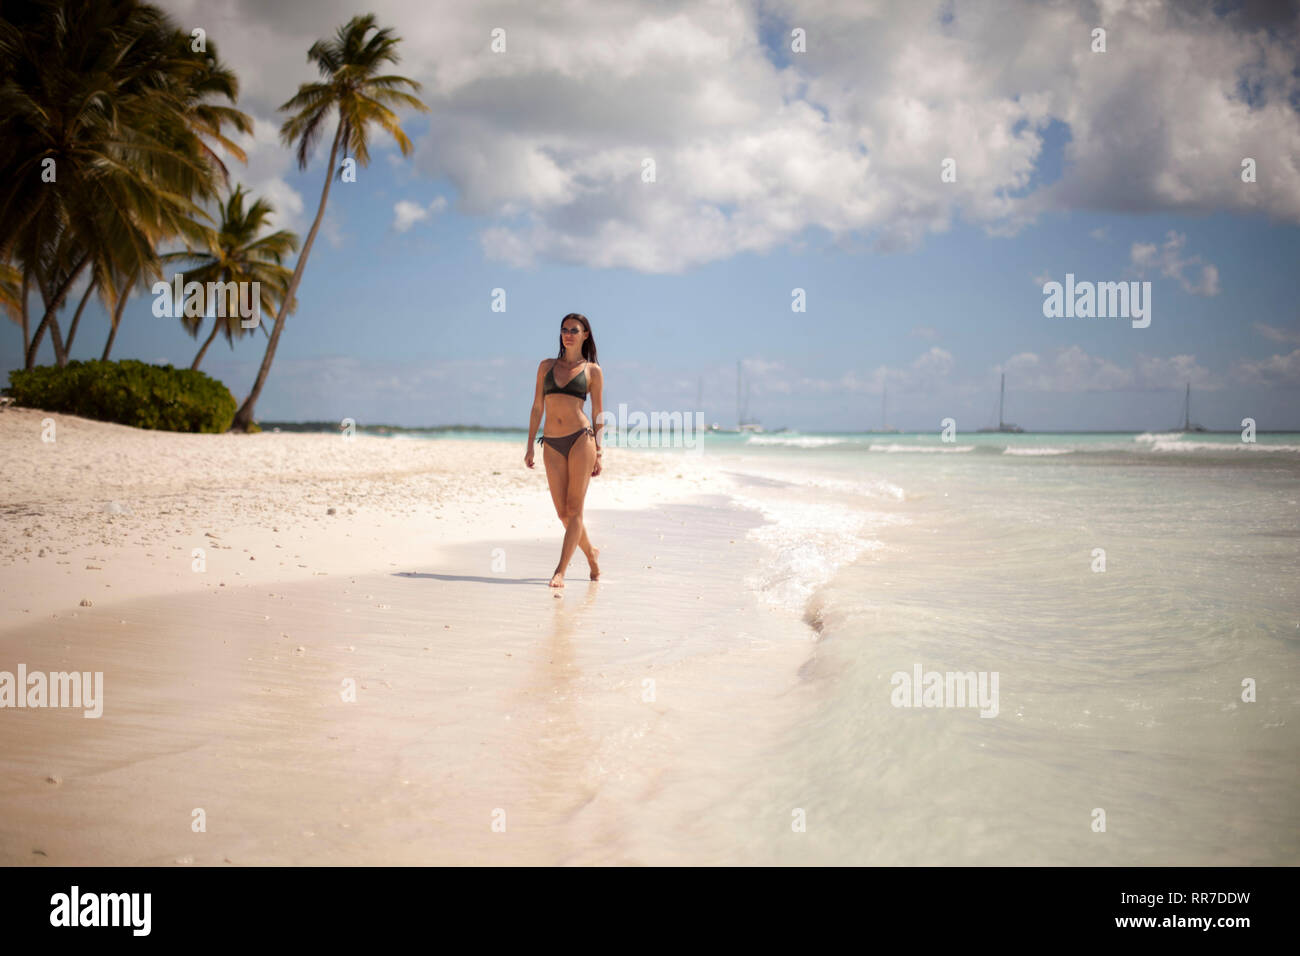 Woman walks on a tropical beach Stock Photo